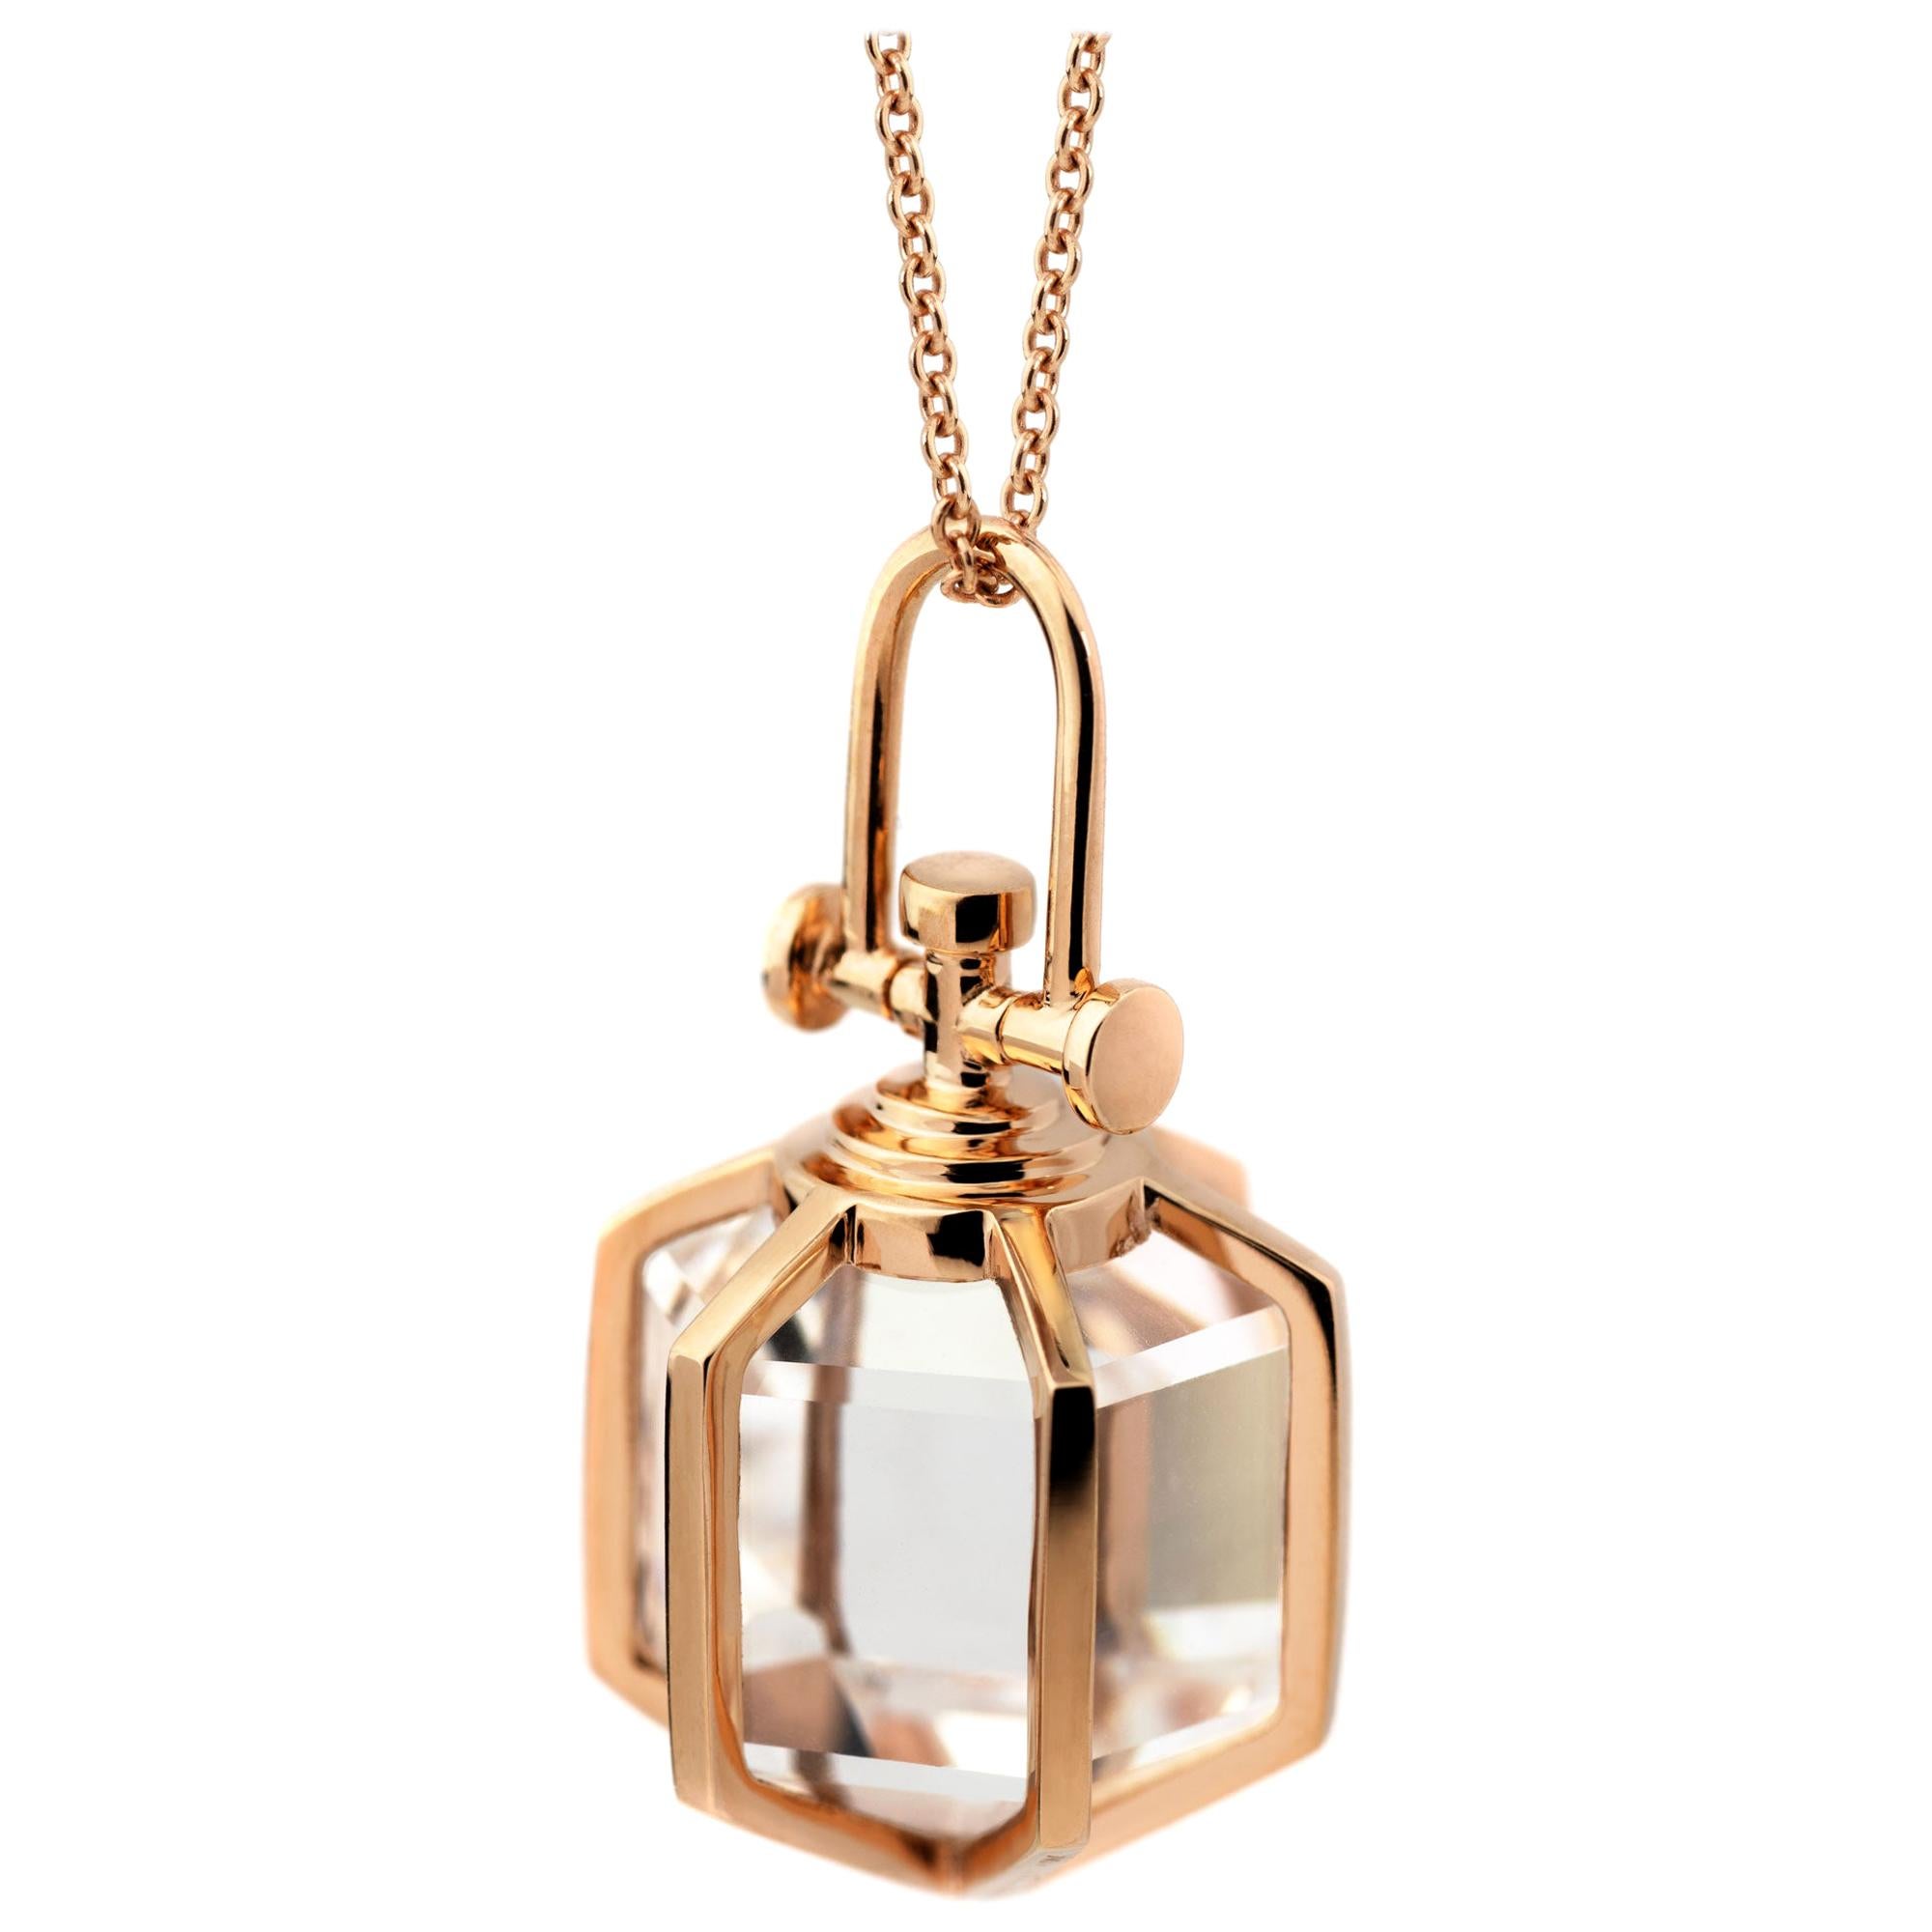 Rebecca Li Six Senses Talisman Necklace, 18k Gold Large Natural Rock Crystal